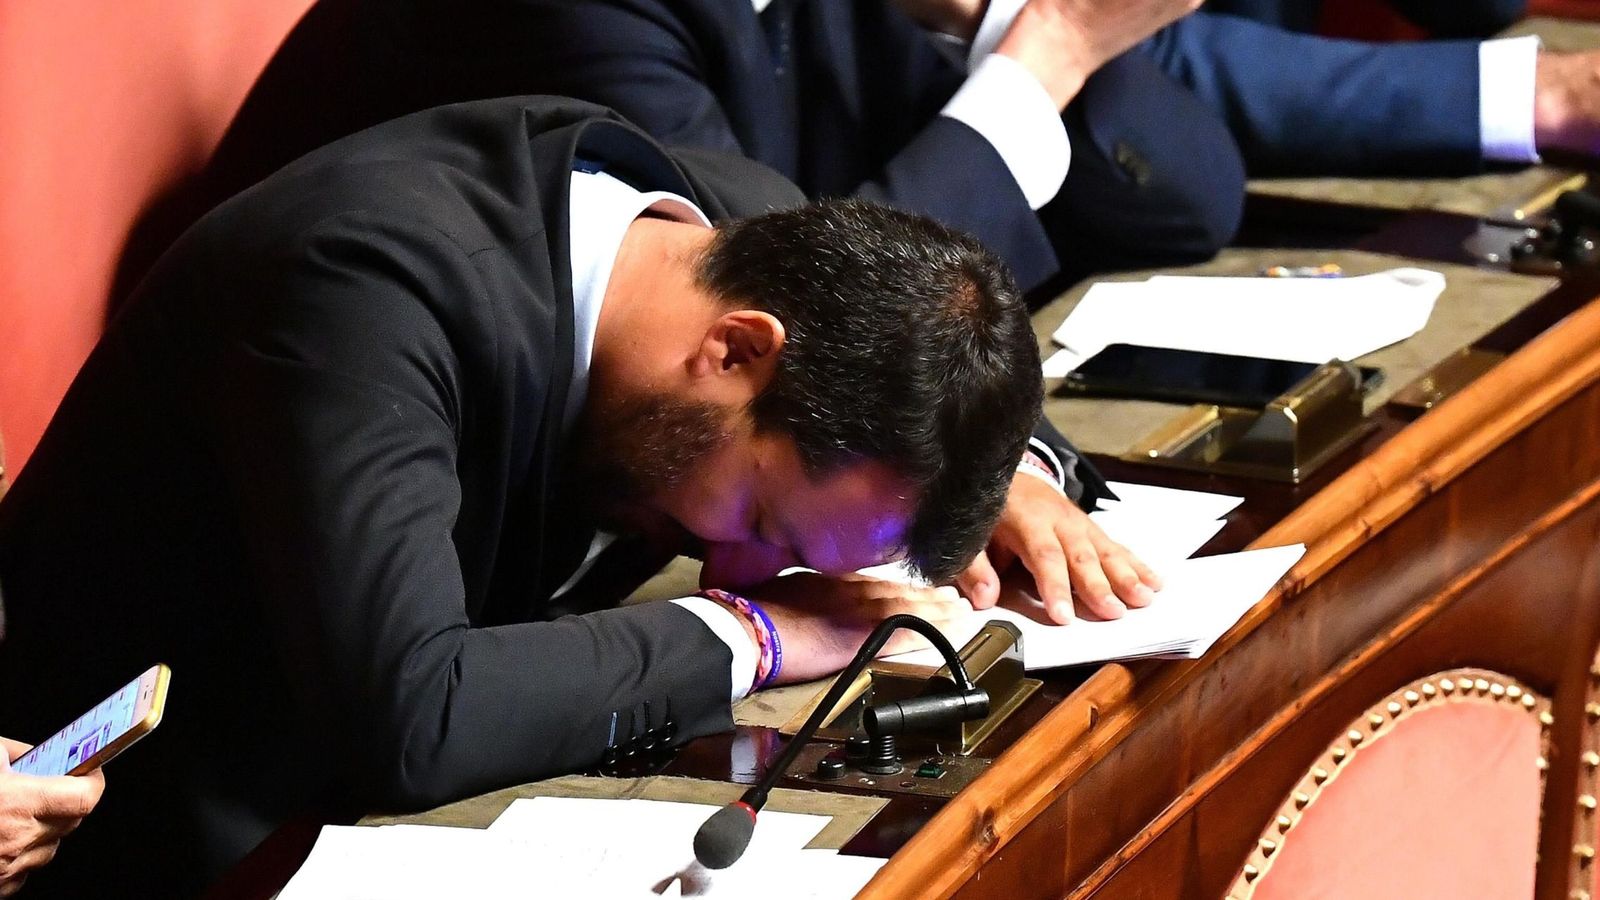 Foto: El ministro de Interior de Italia, Matteo Salvini, este martes en el Senado. (Reuters)